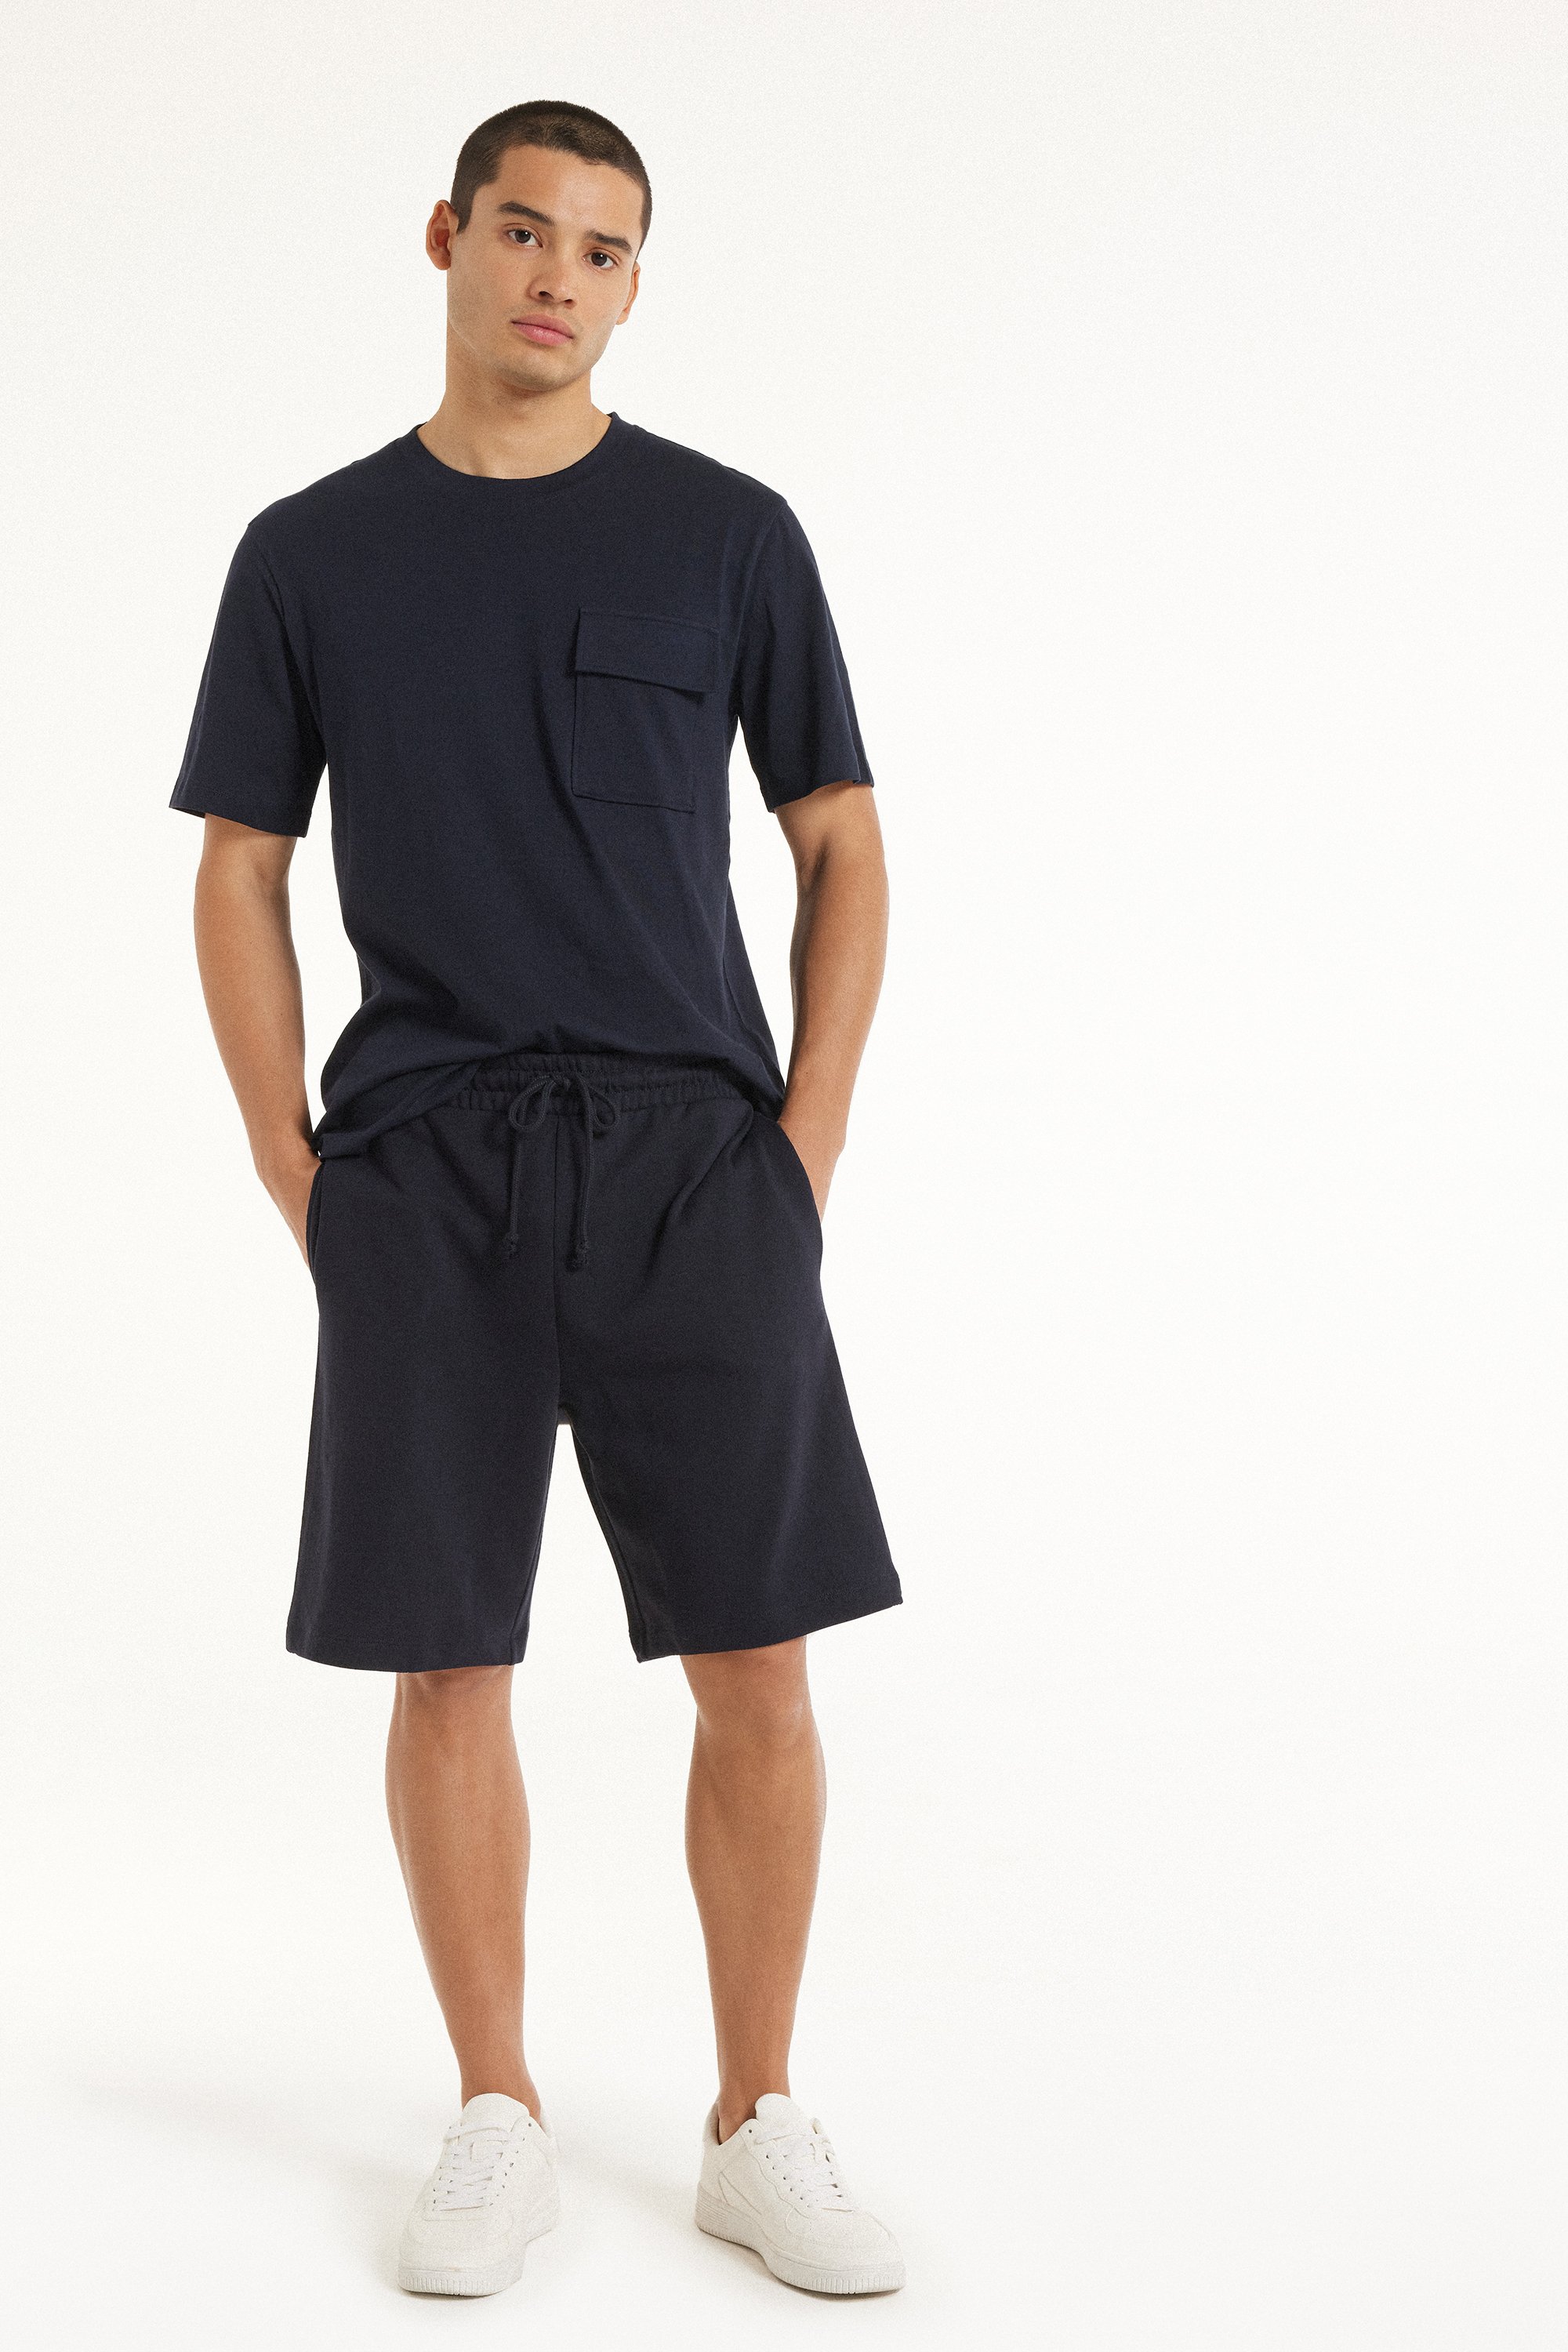 Pocket Shorts in Cotton Fleece